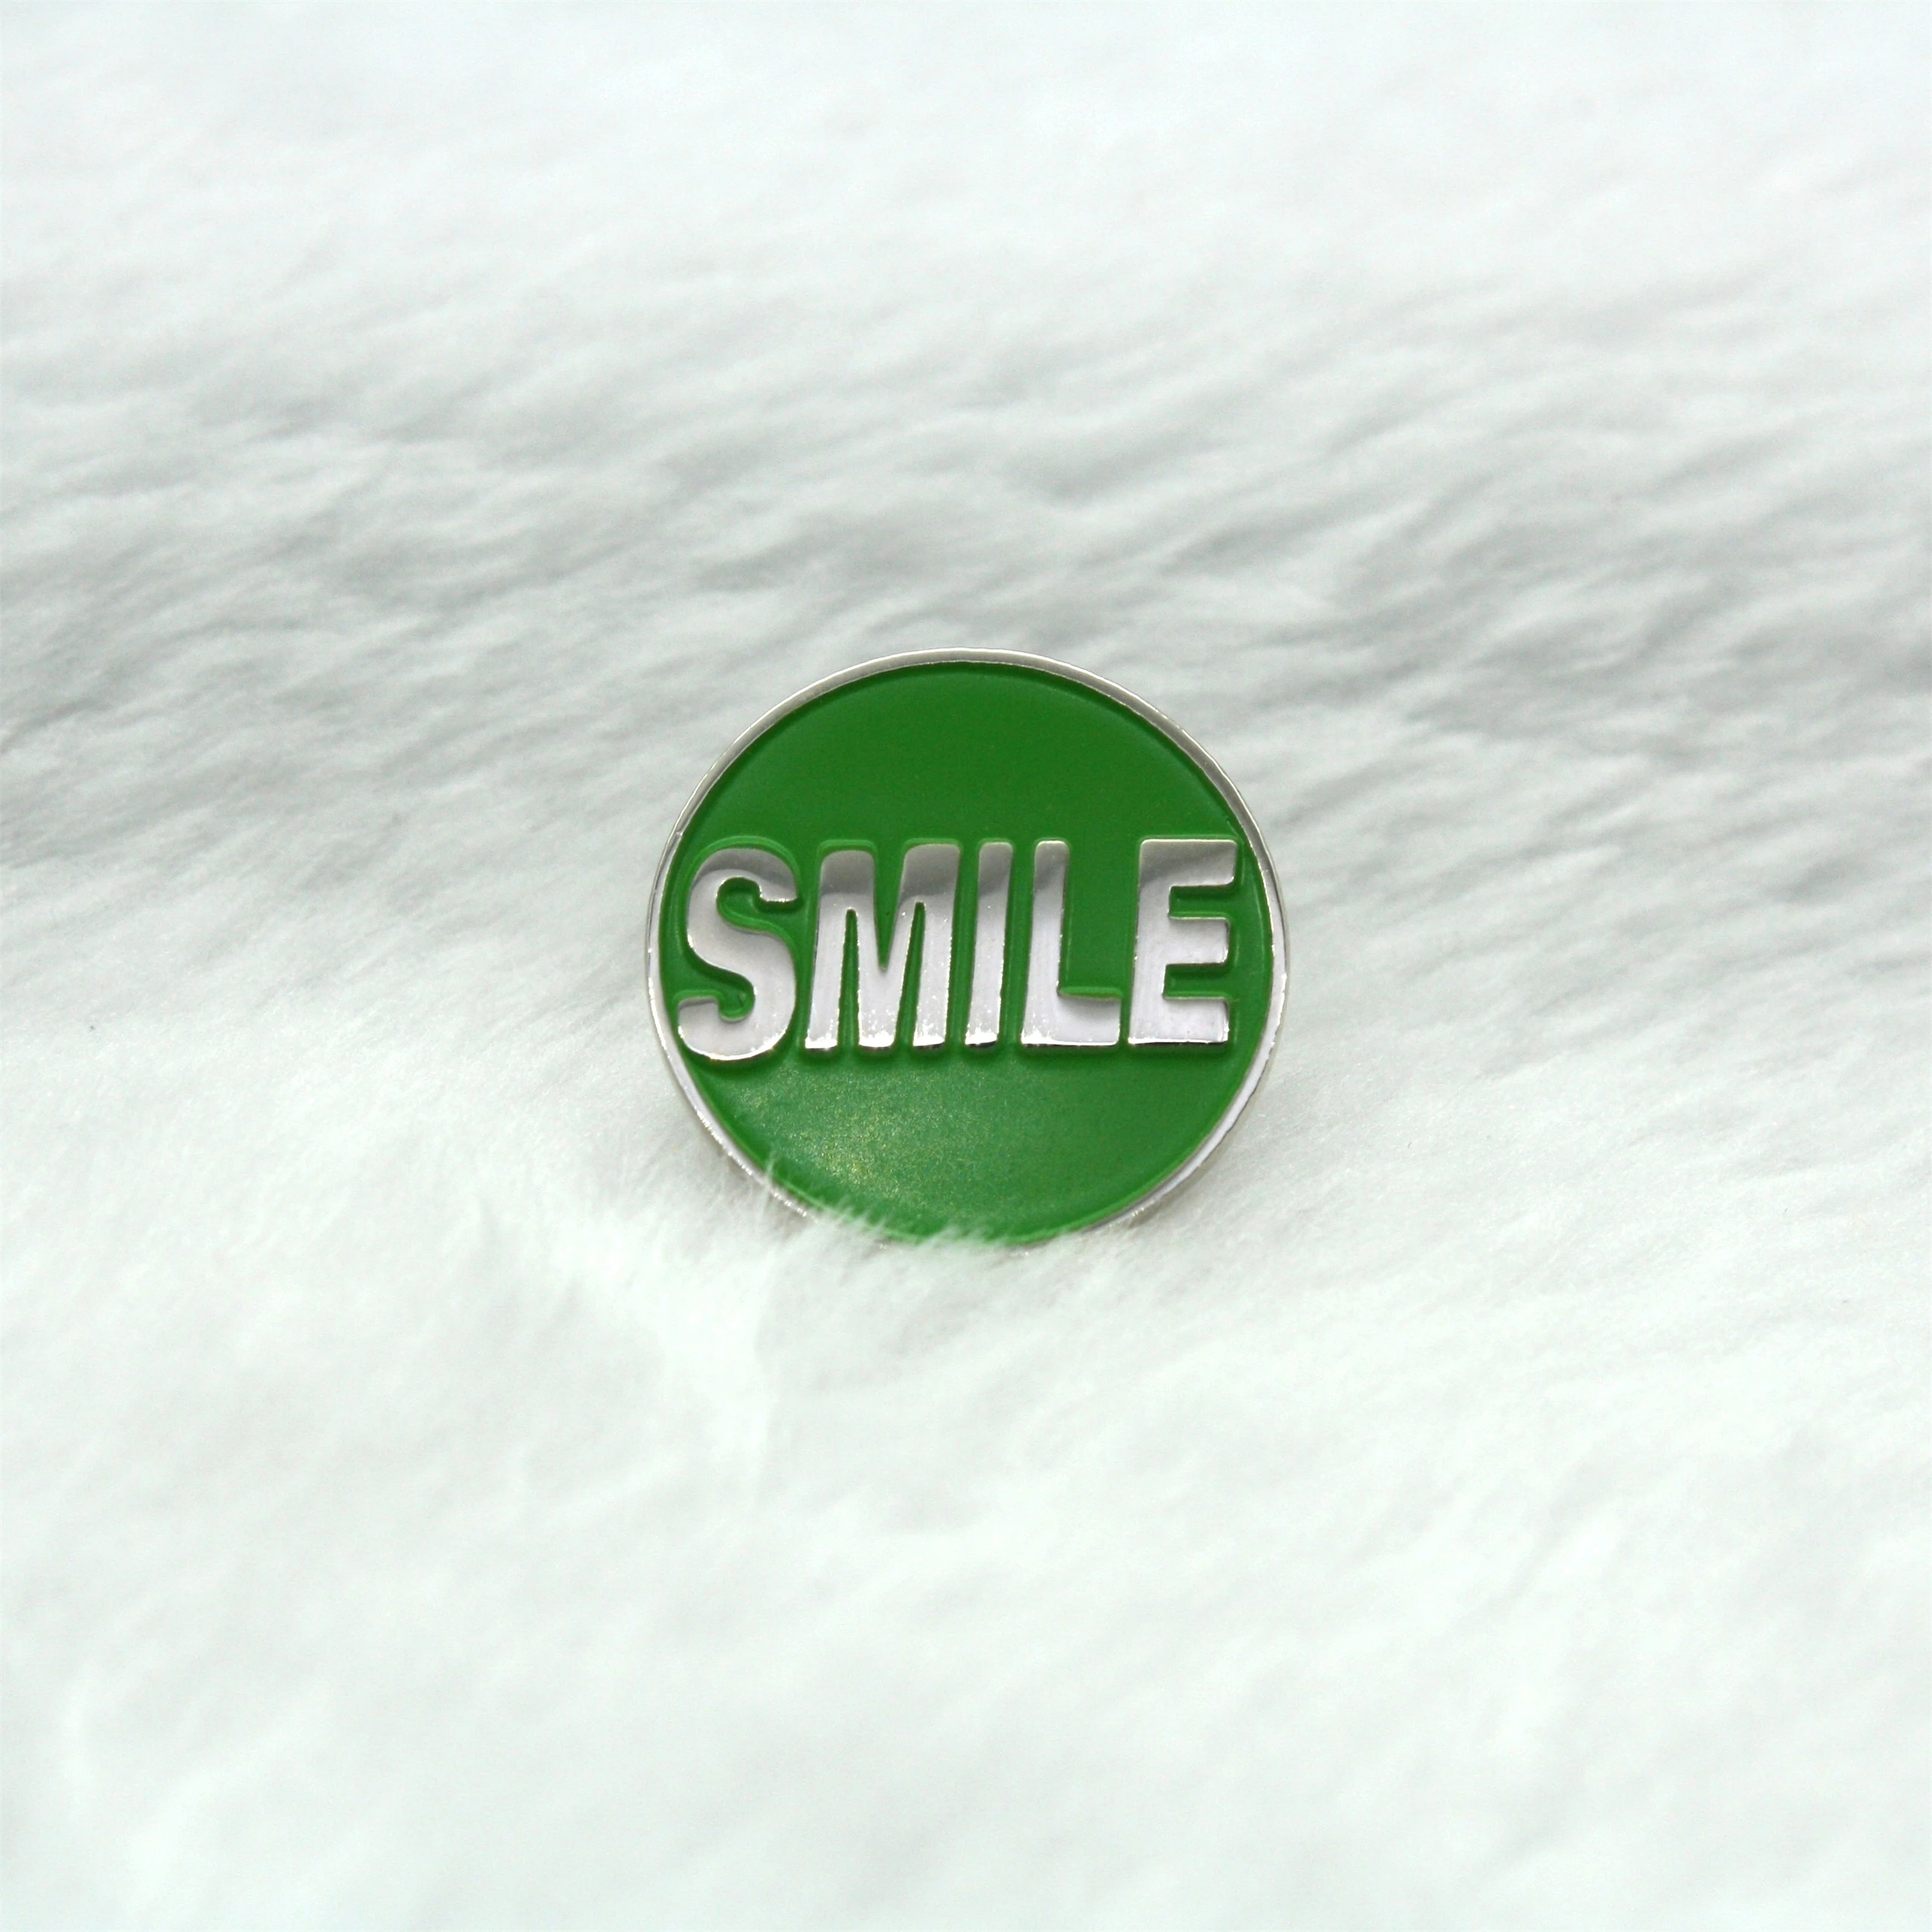 Free design rounded bag badge metal pin soft enamel lapel pin